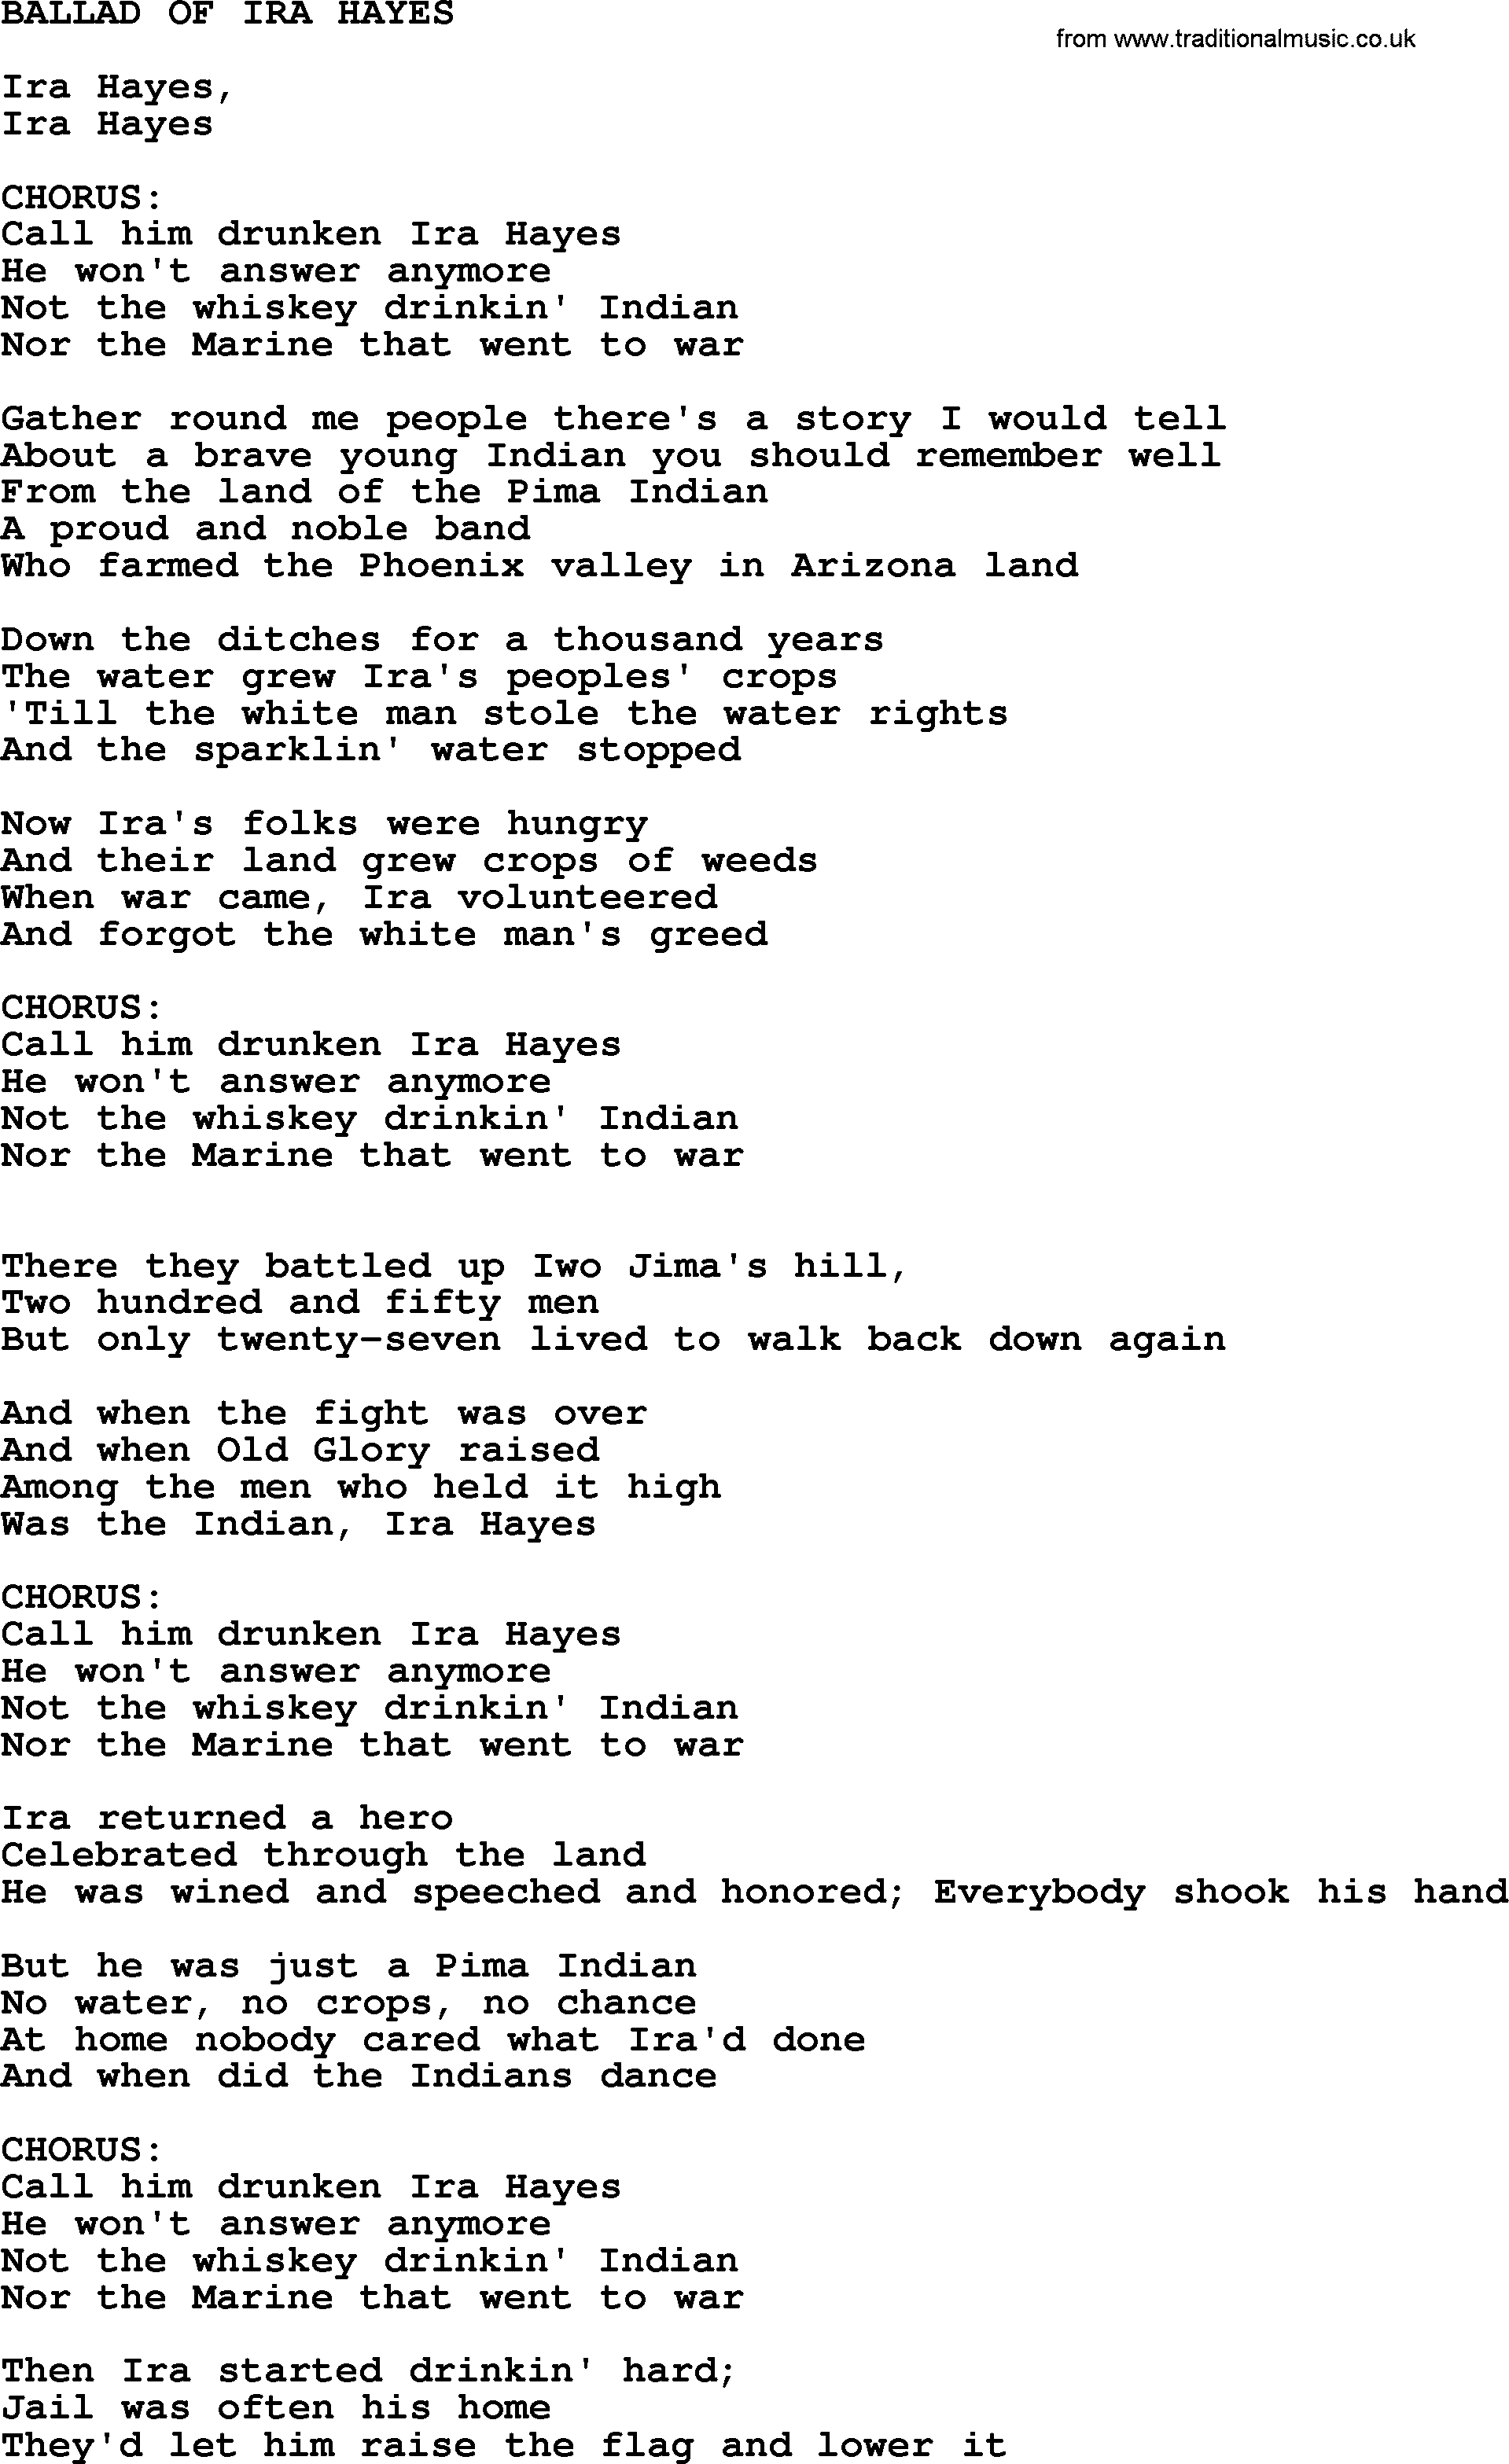 Johnny Cash song Ballad Of Ira Hayes.txt lyrics